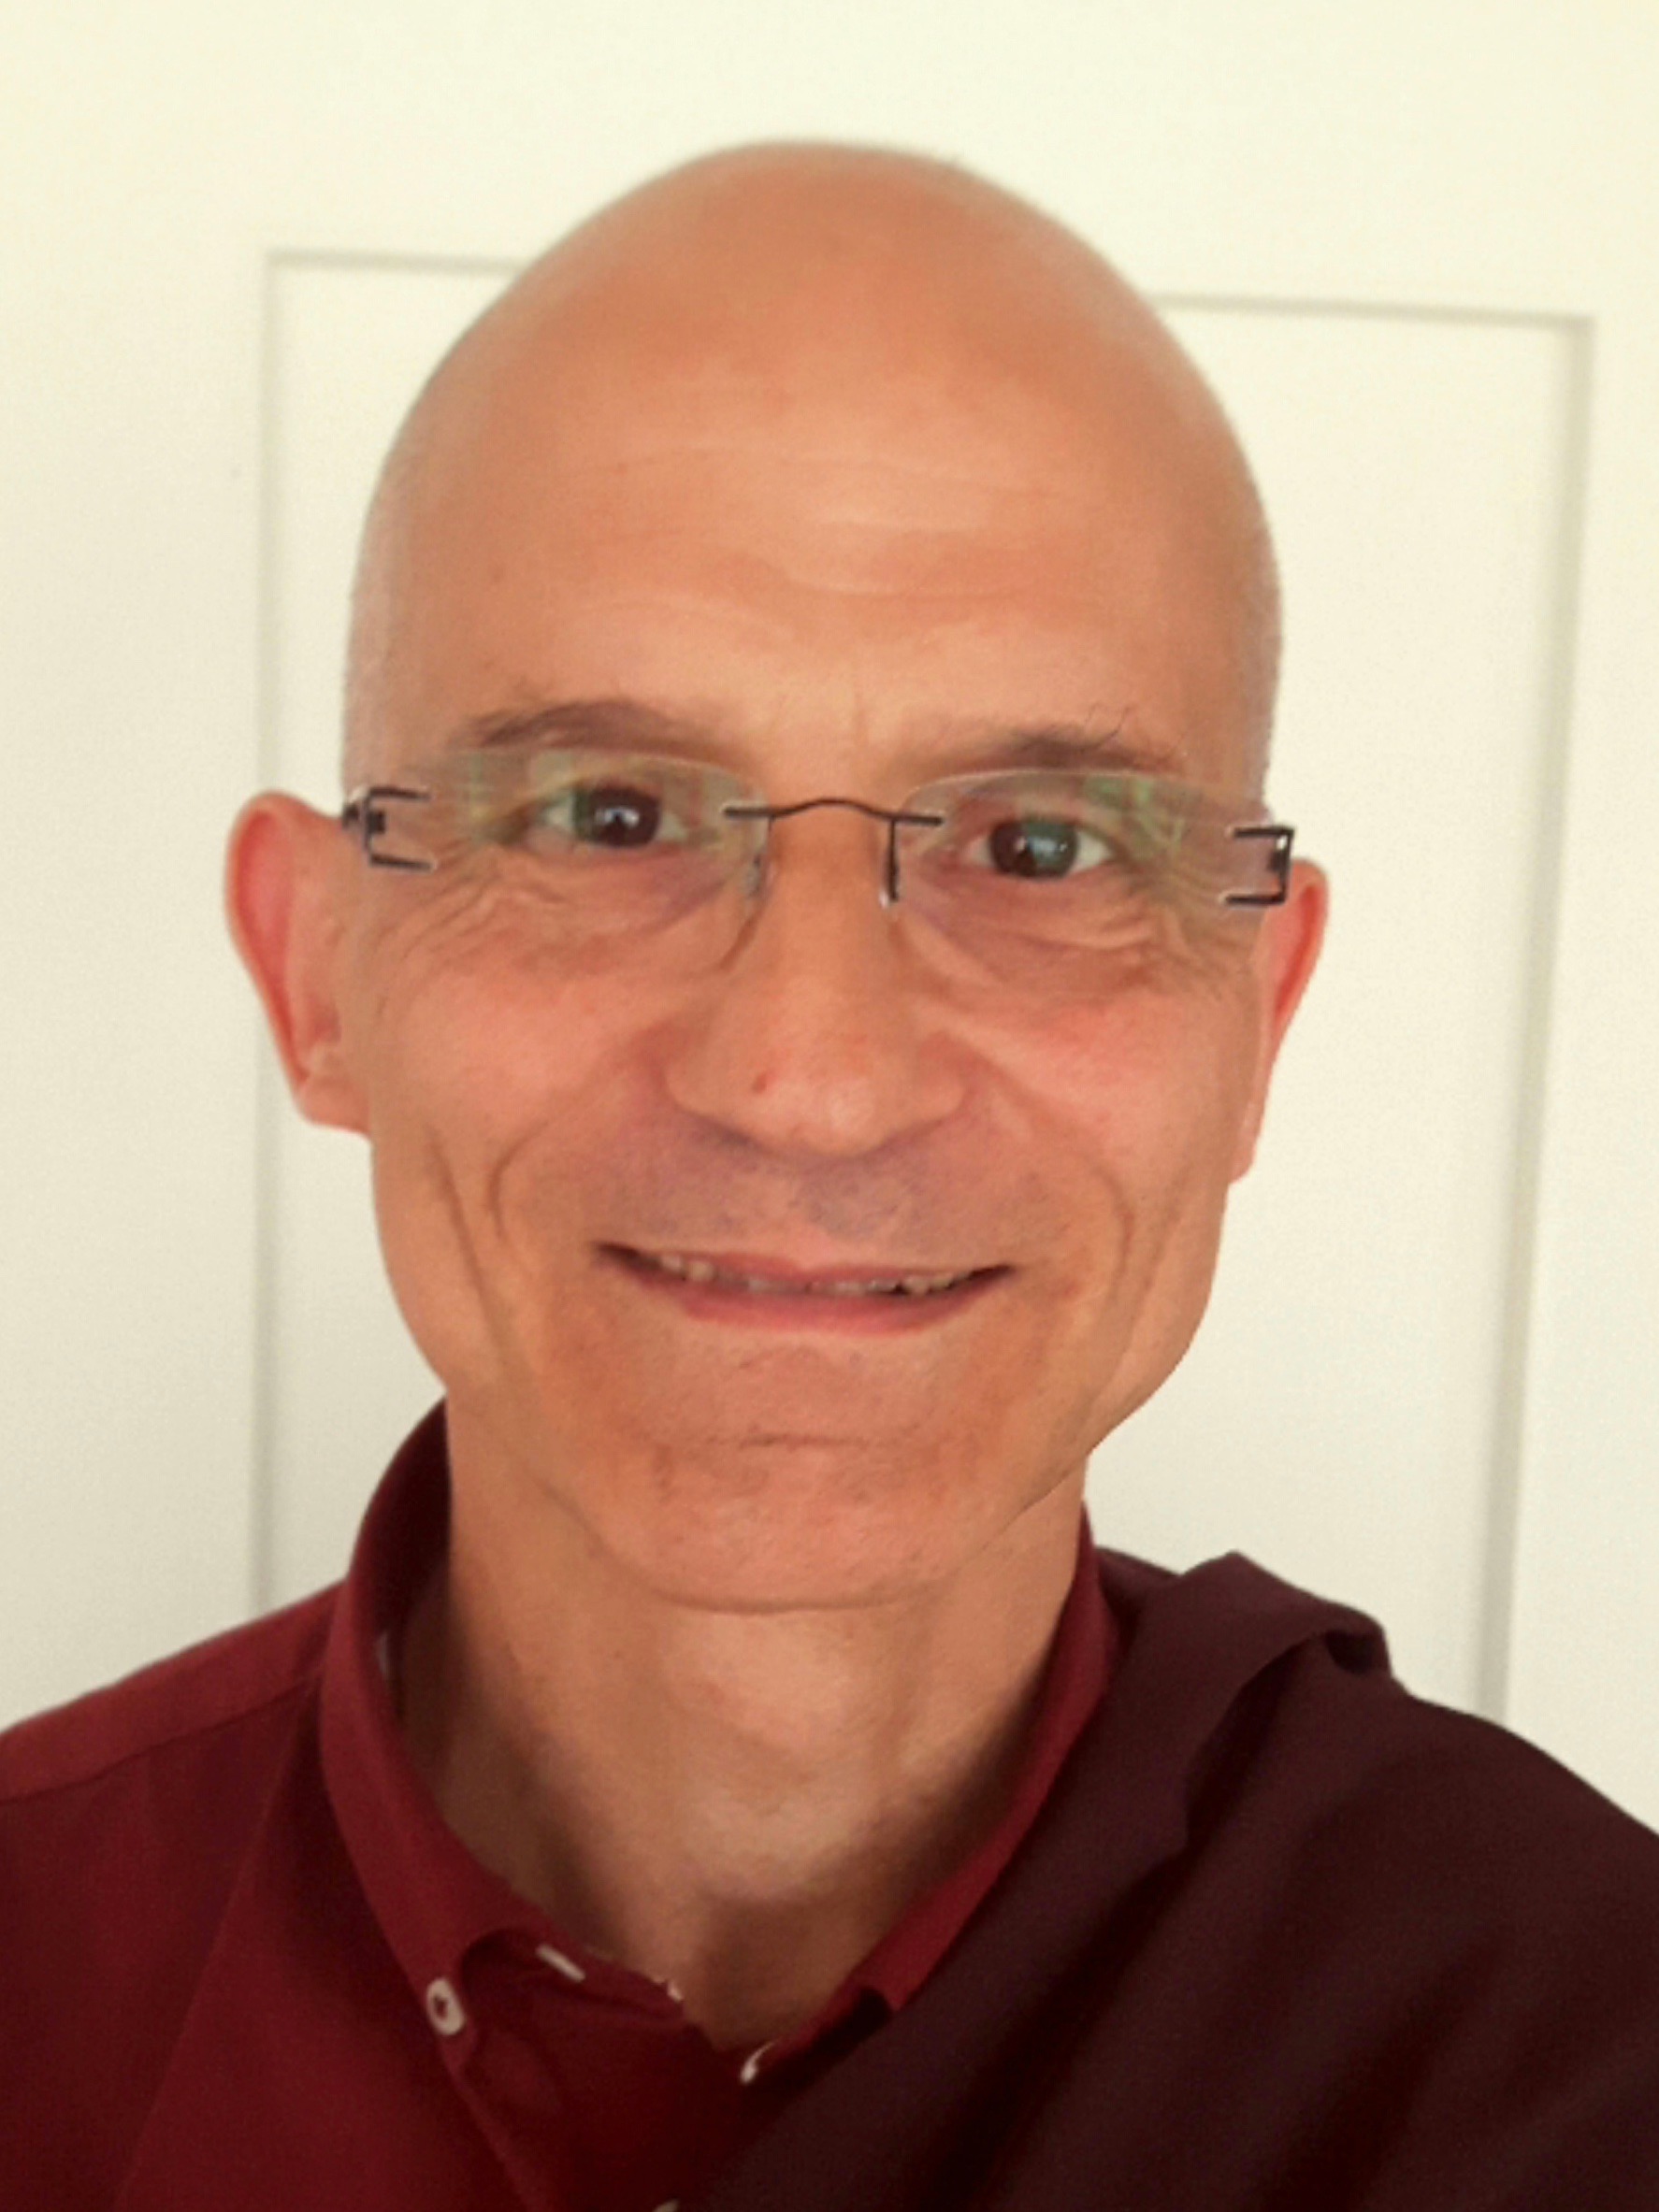 A bald man in glasses and Tibetan lamarobes